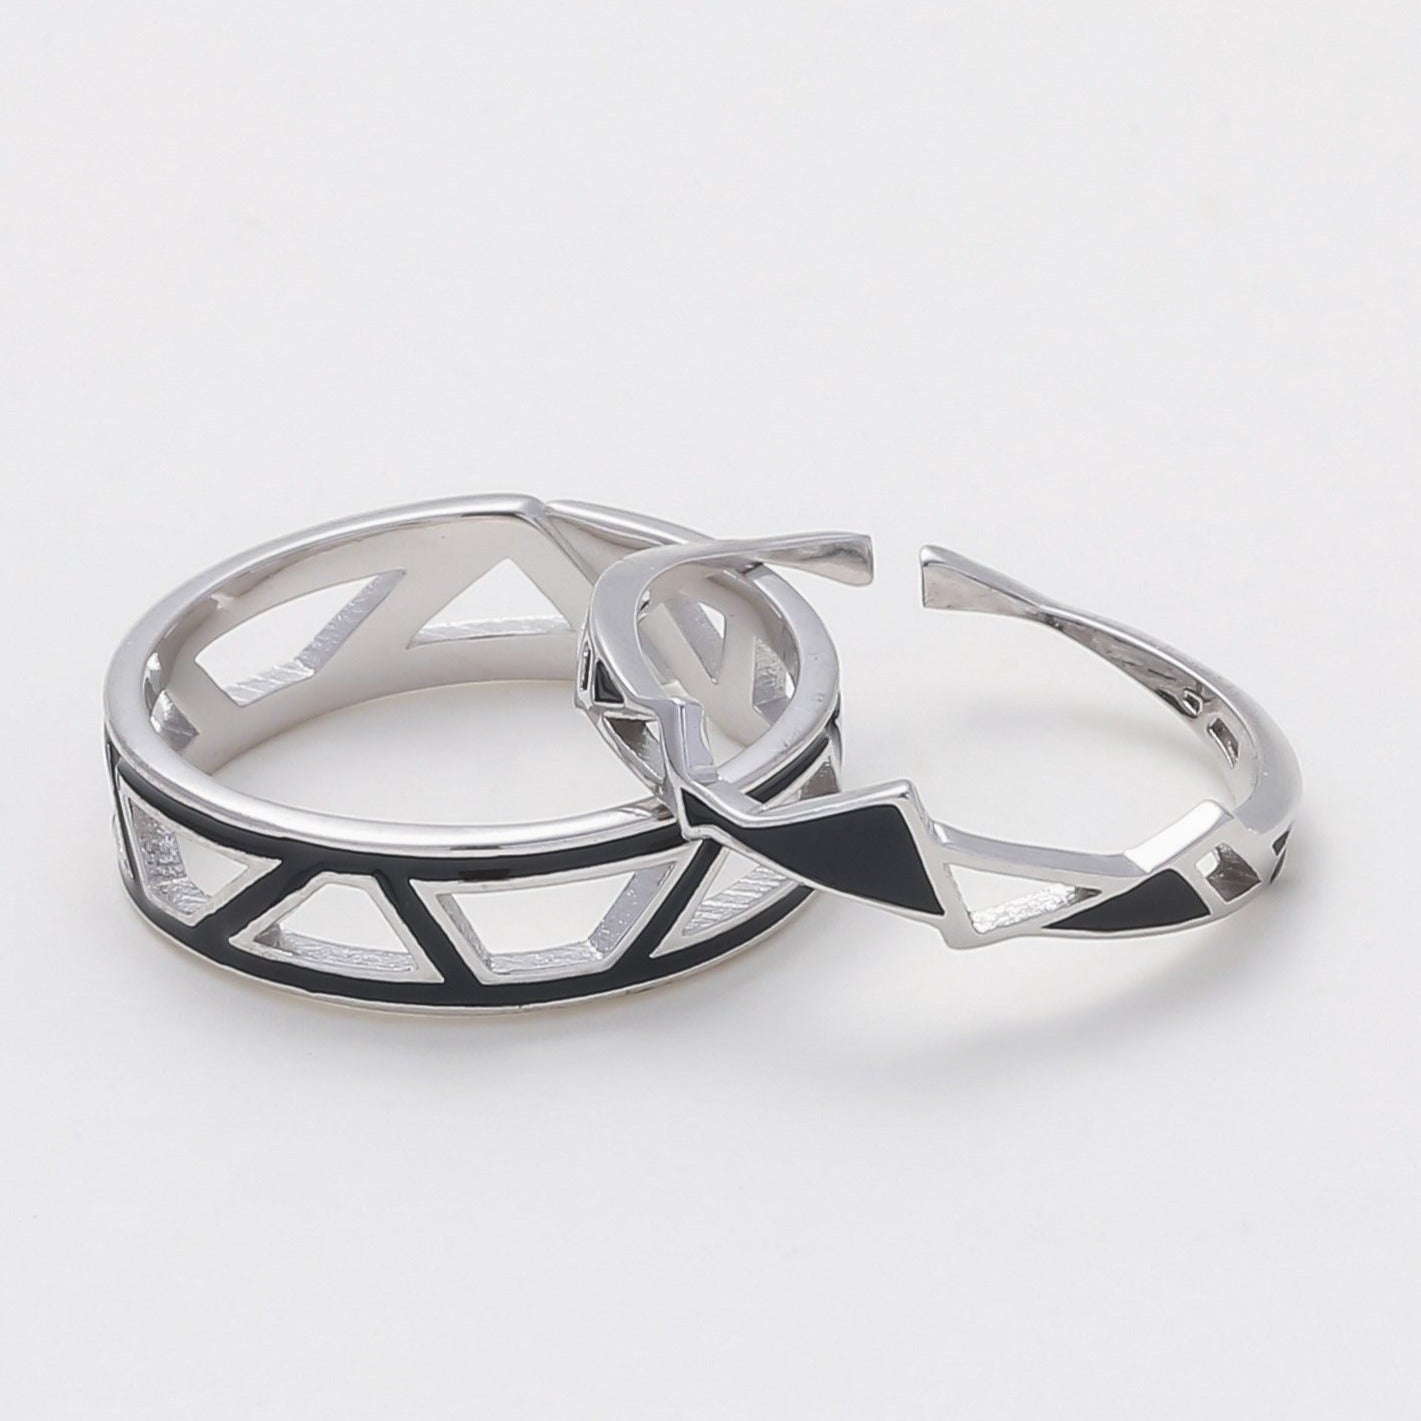 Romantic Engagement Rings | Bridge Rings | Romantic Rings | AVIJEWELRY